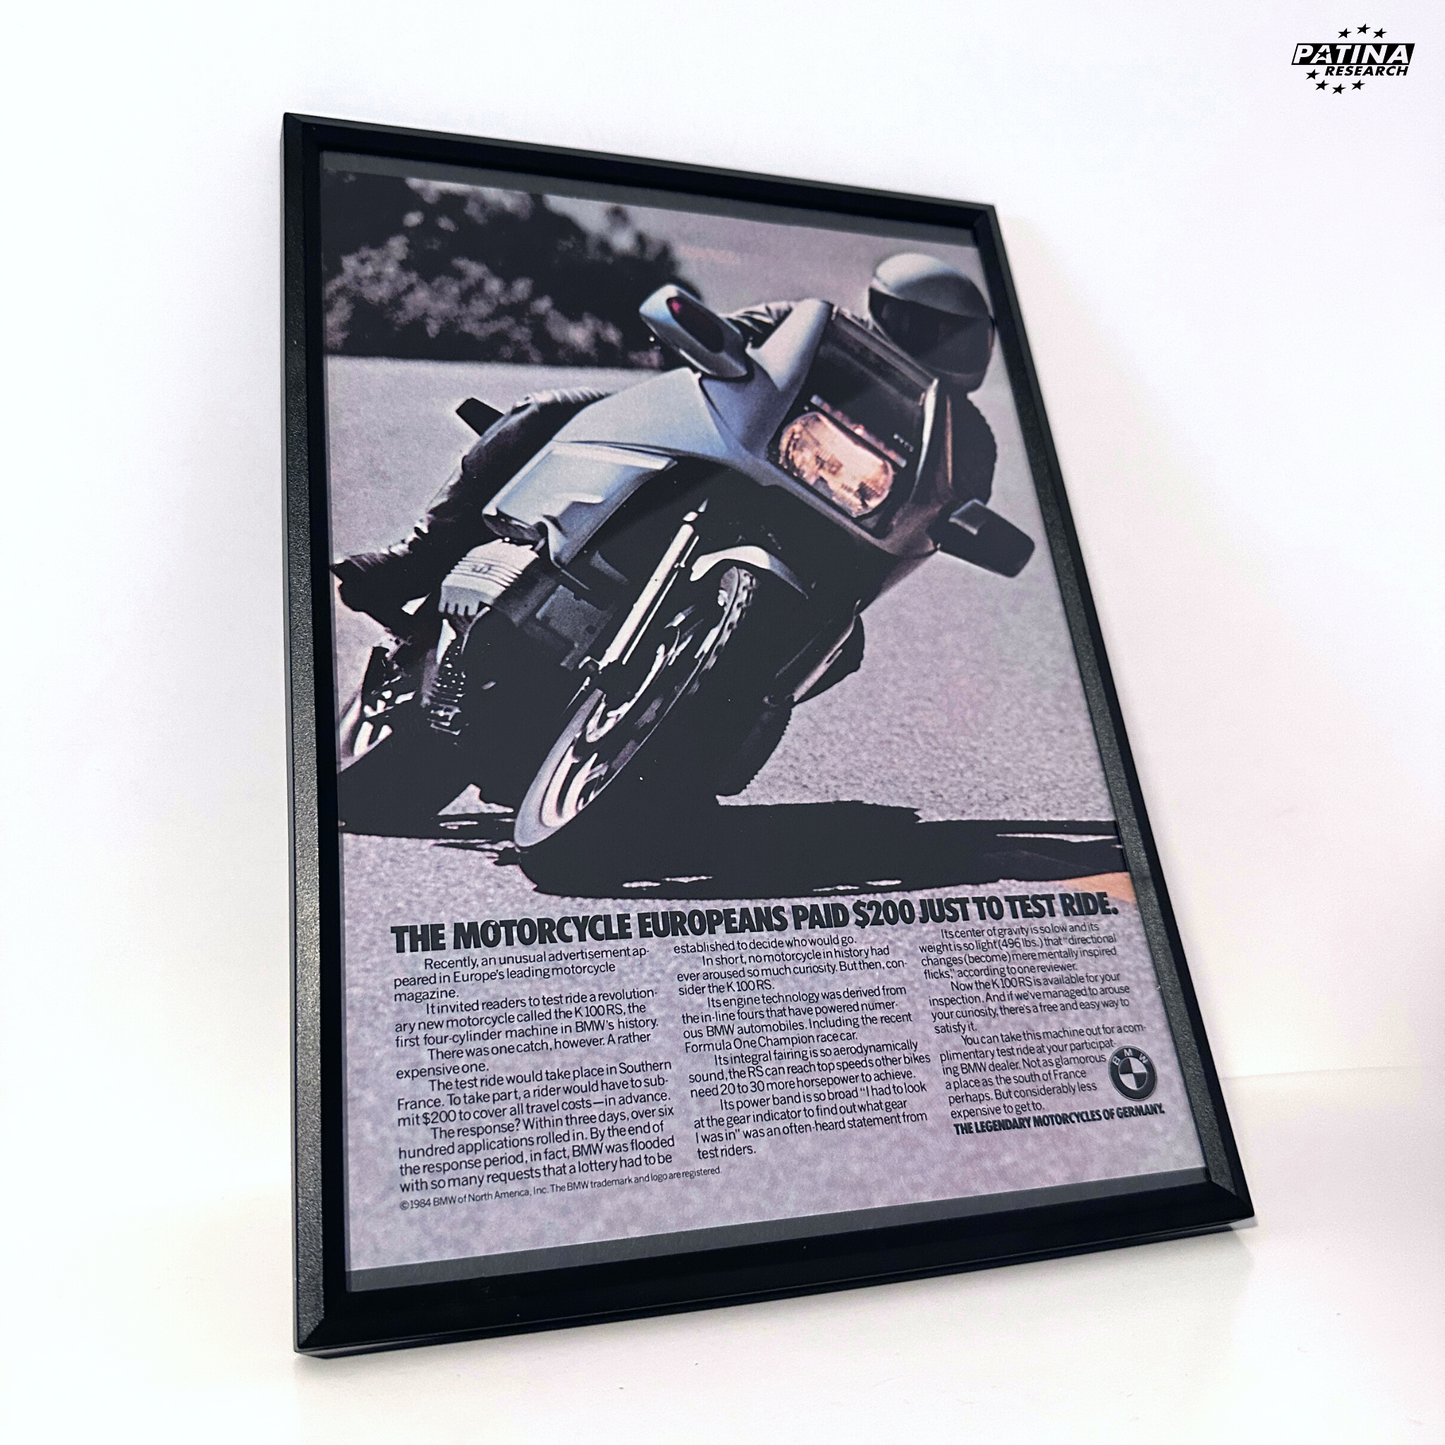 Bmw motorcycle European test ride framed ad